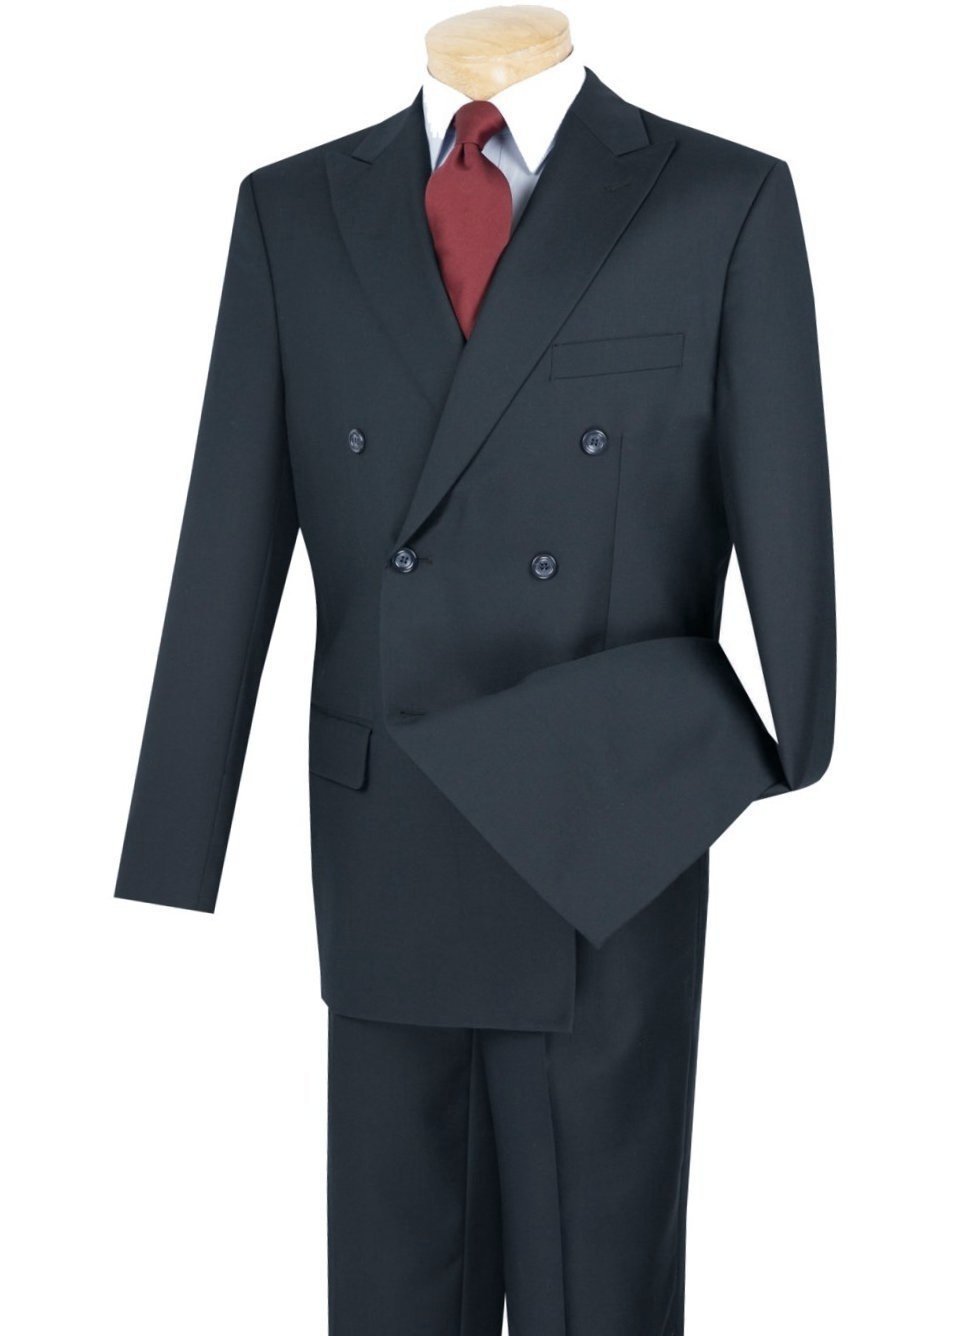 Vinci Regular Fit Double Breasted 2 Piece Suit (Navy) DC900-1